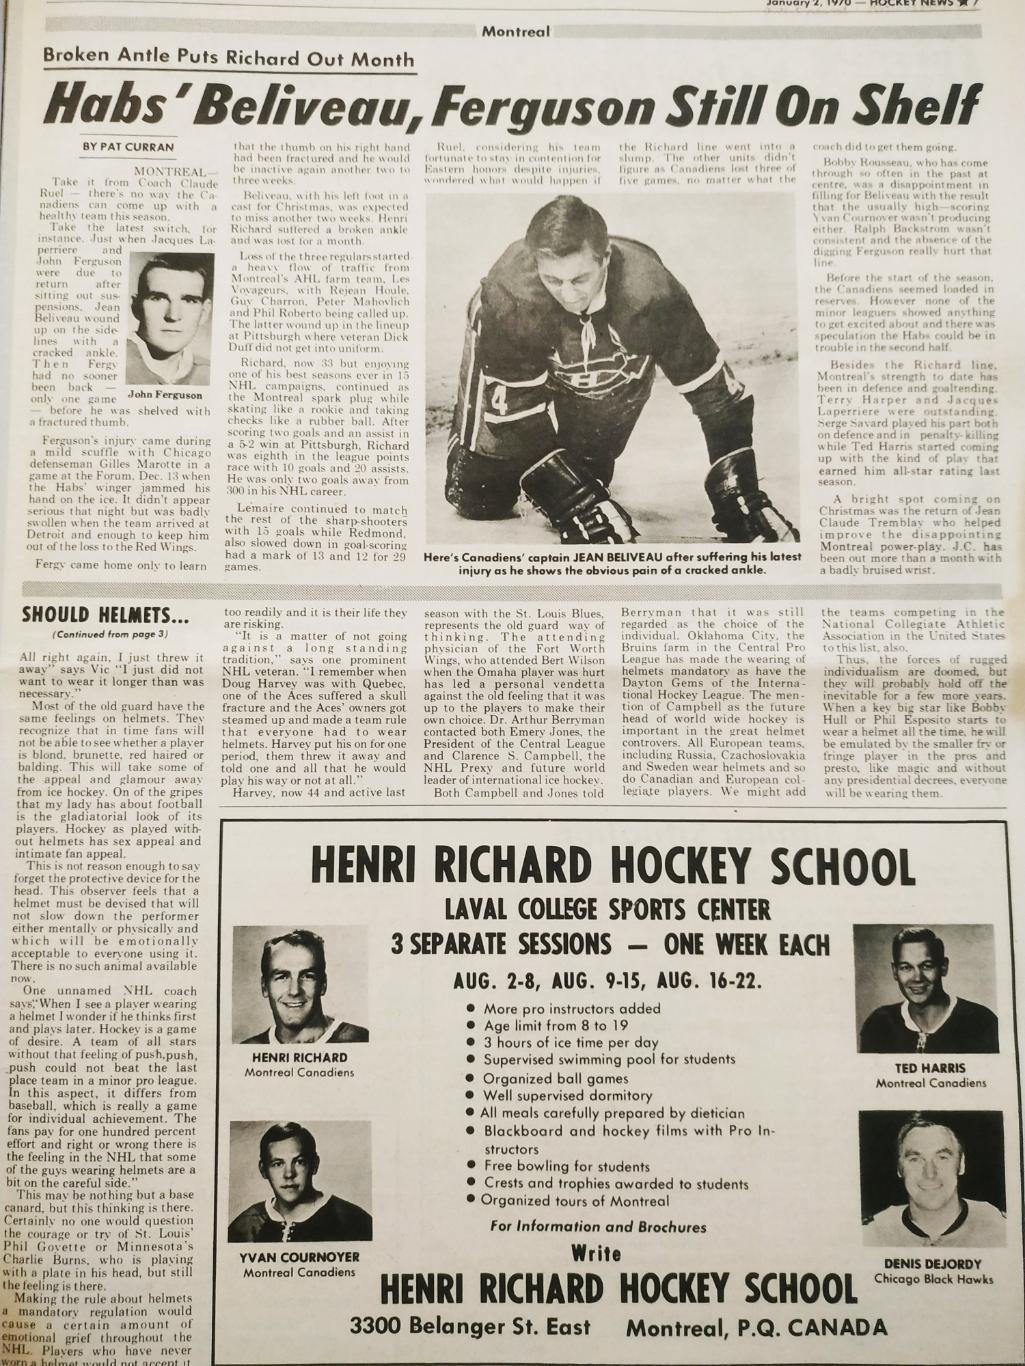 ХОККЕЙ ЖУРНАЛ ЕЖЕНЕДЕЛЬНИК НХЛ НОВОСТИ ХОККЕЯ JAN.2 1970 NHL THE HOCKEY NEWS 3